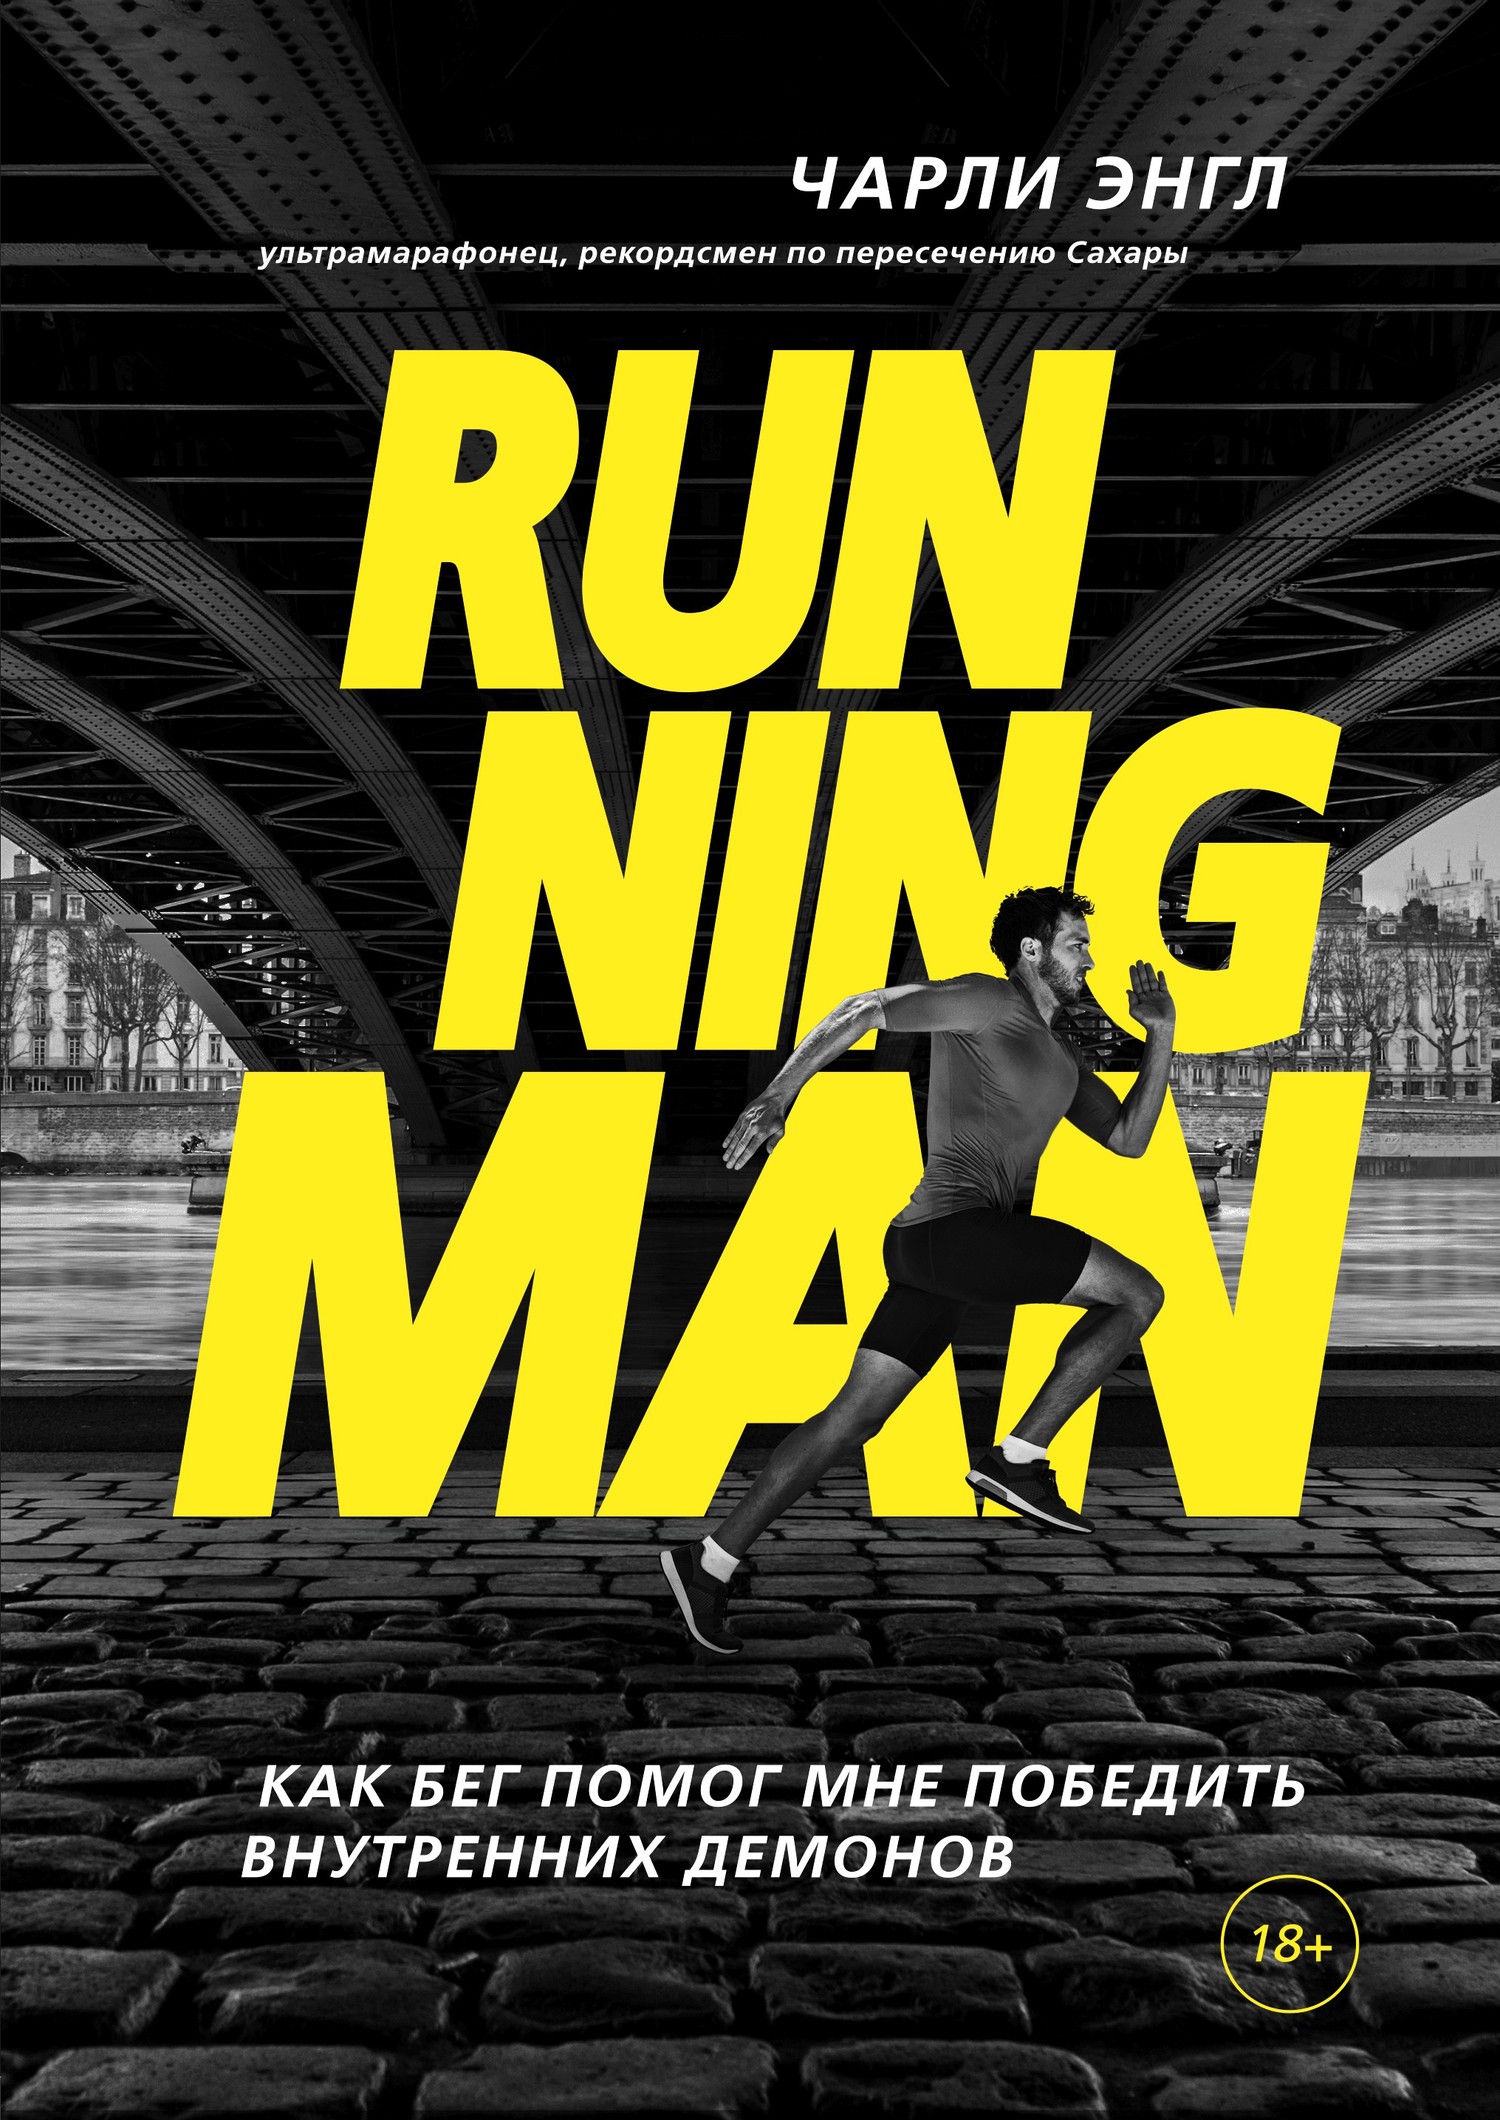 Download film running man